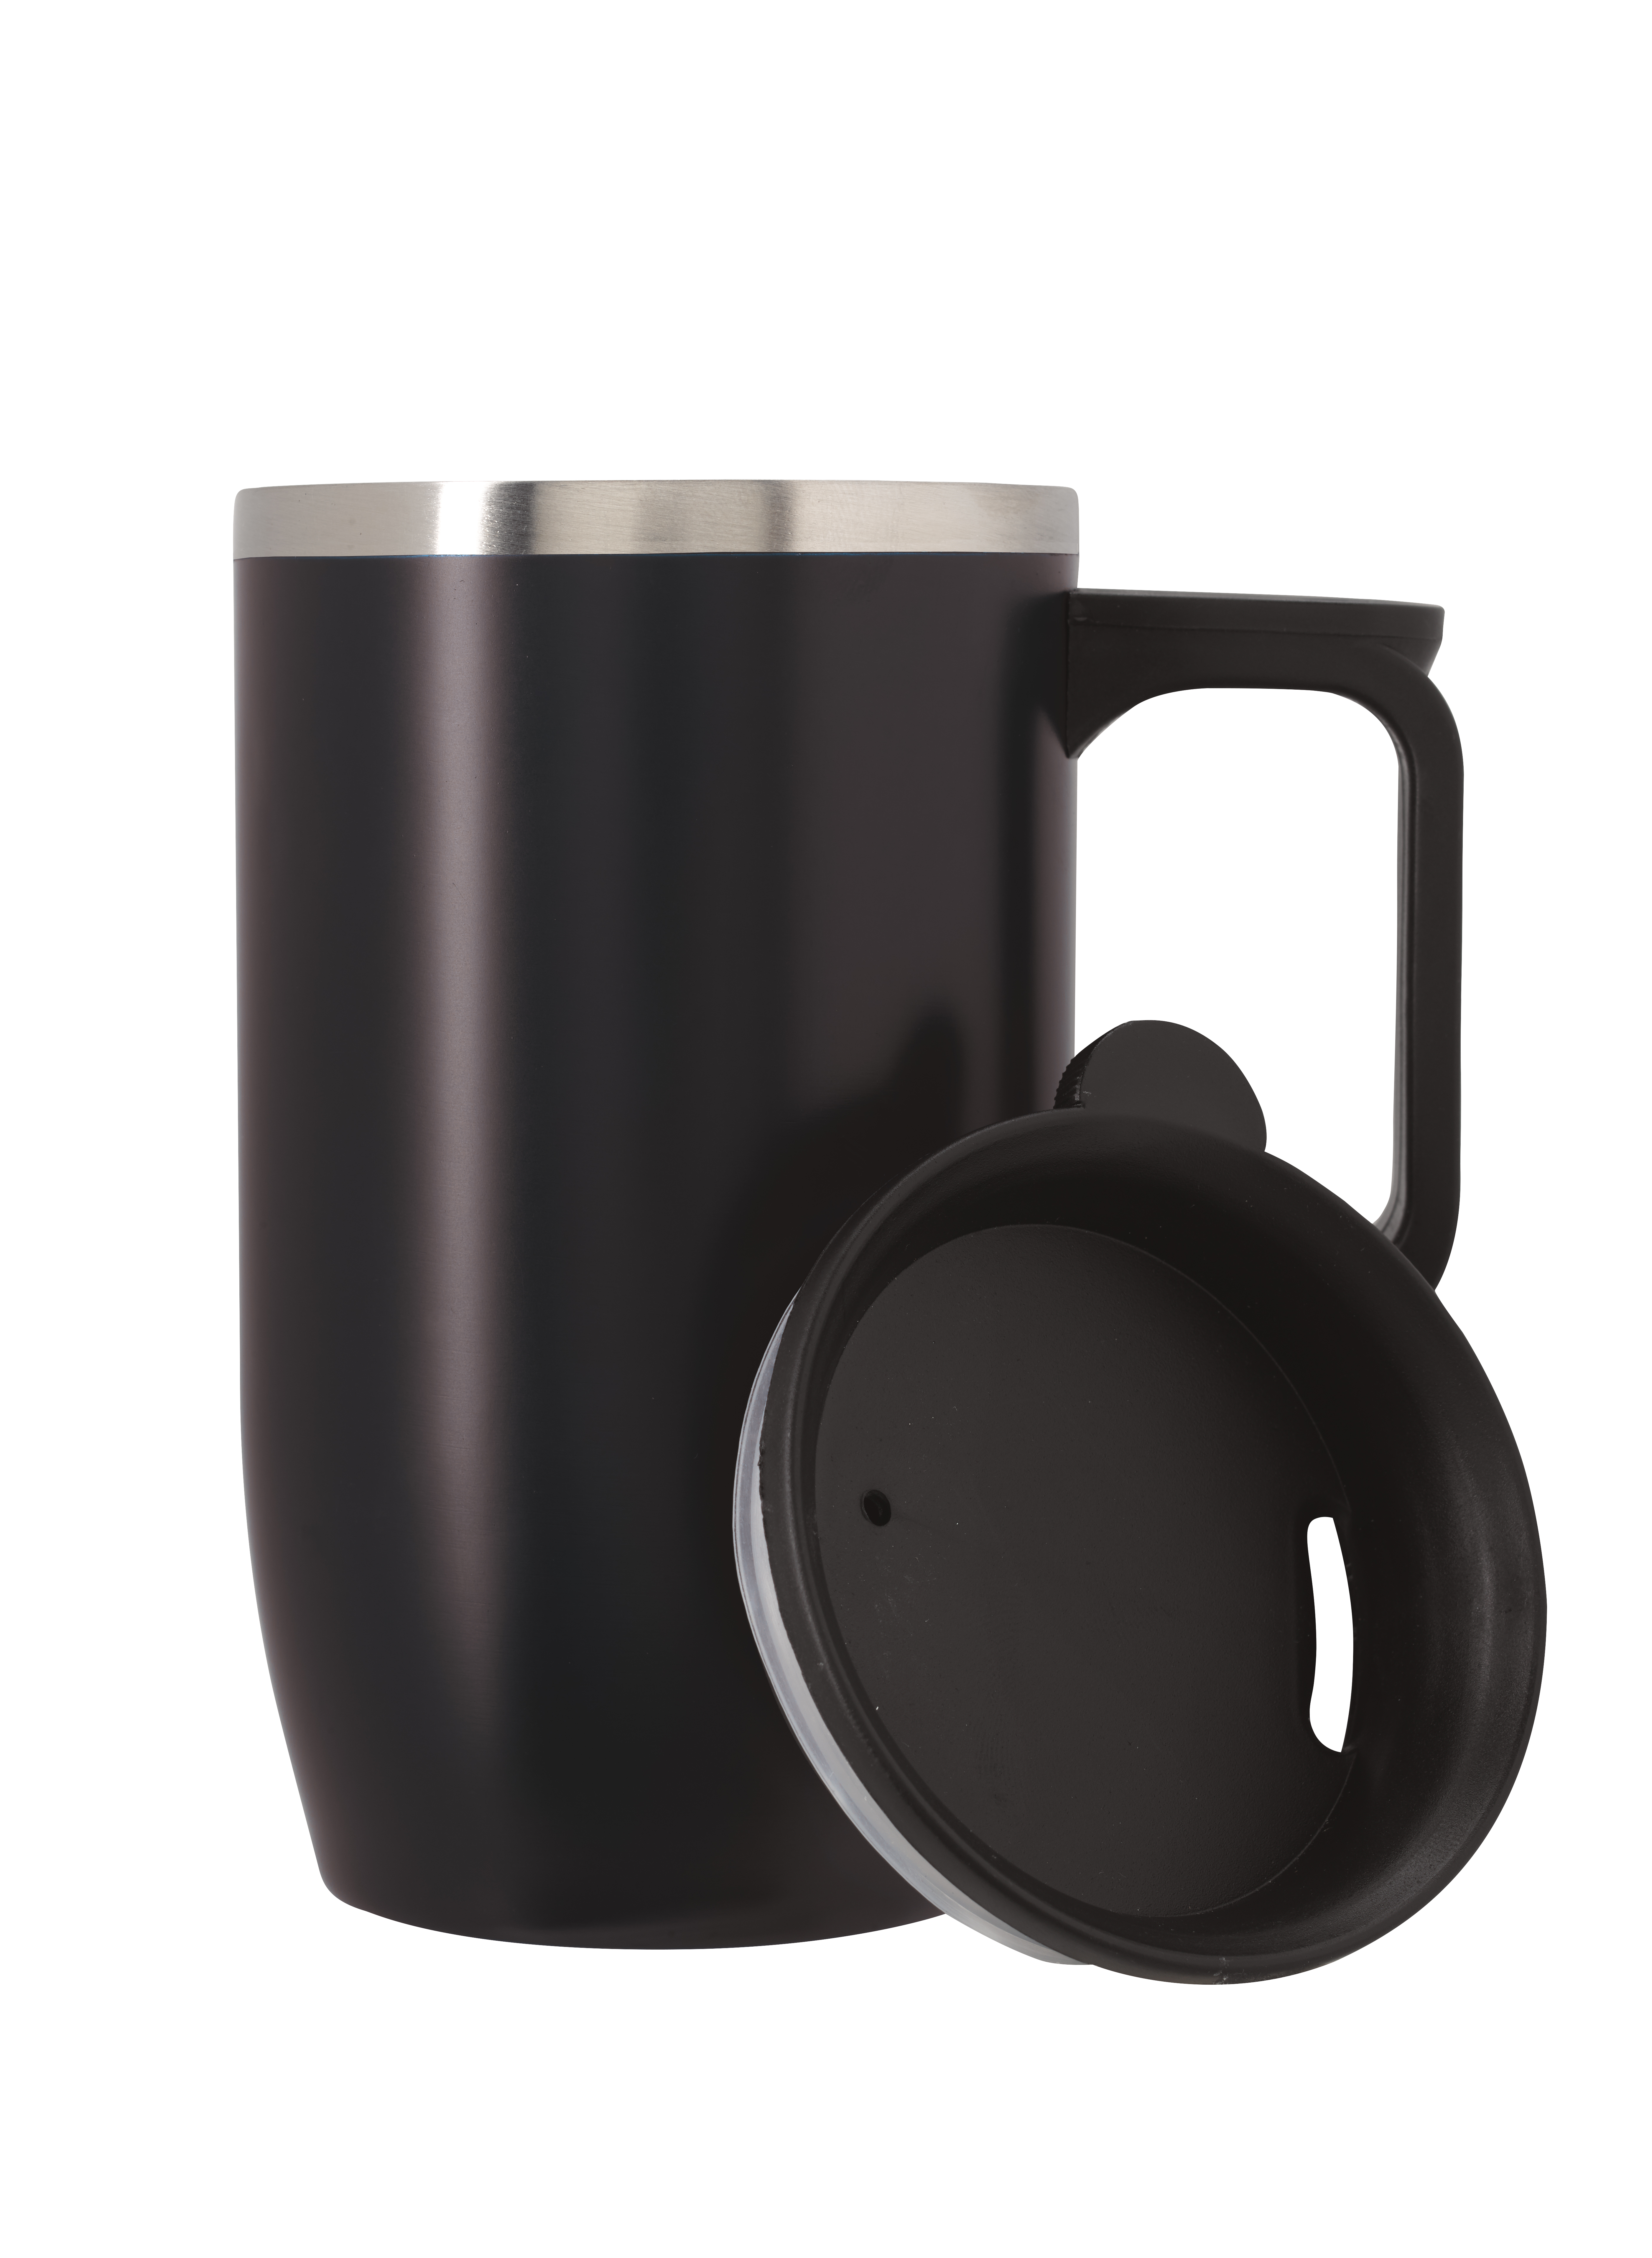 Good Value 46193 - Keke Travel Mug - 14 oz. $10.48 - Drinkware